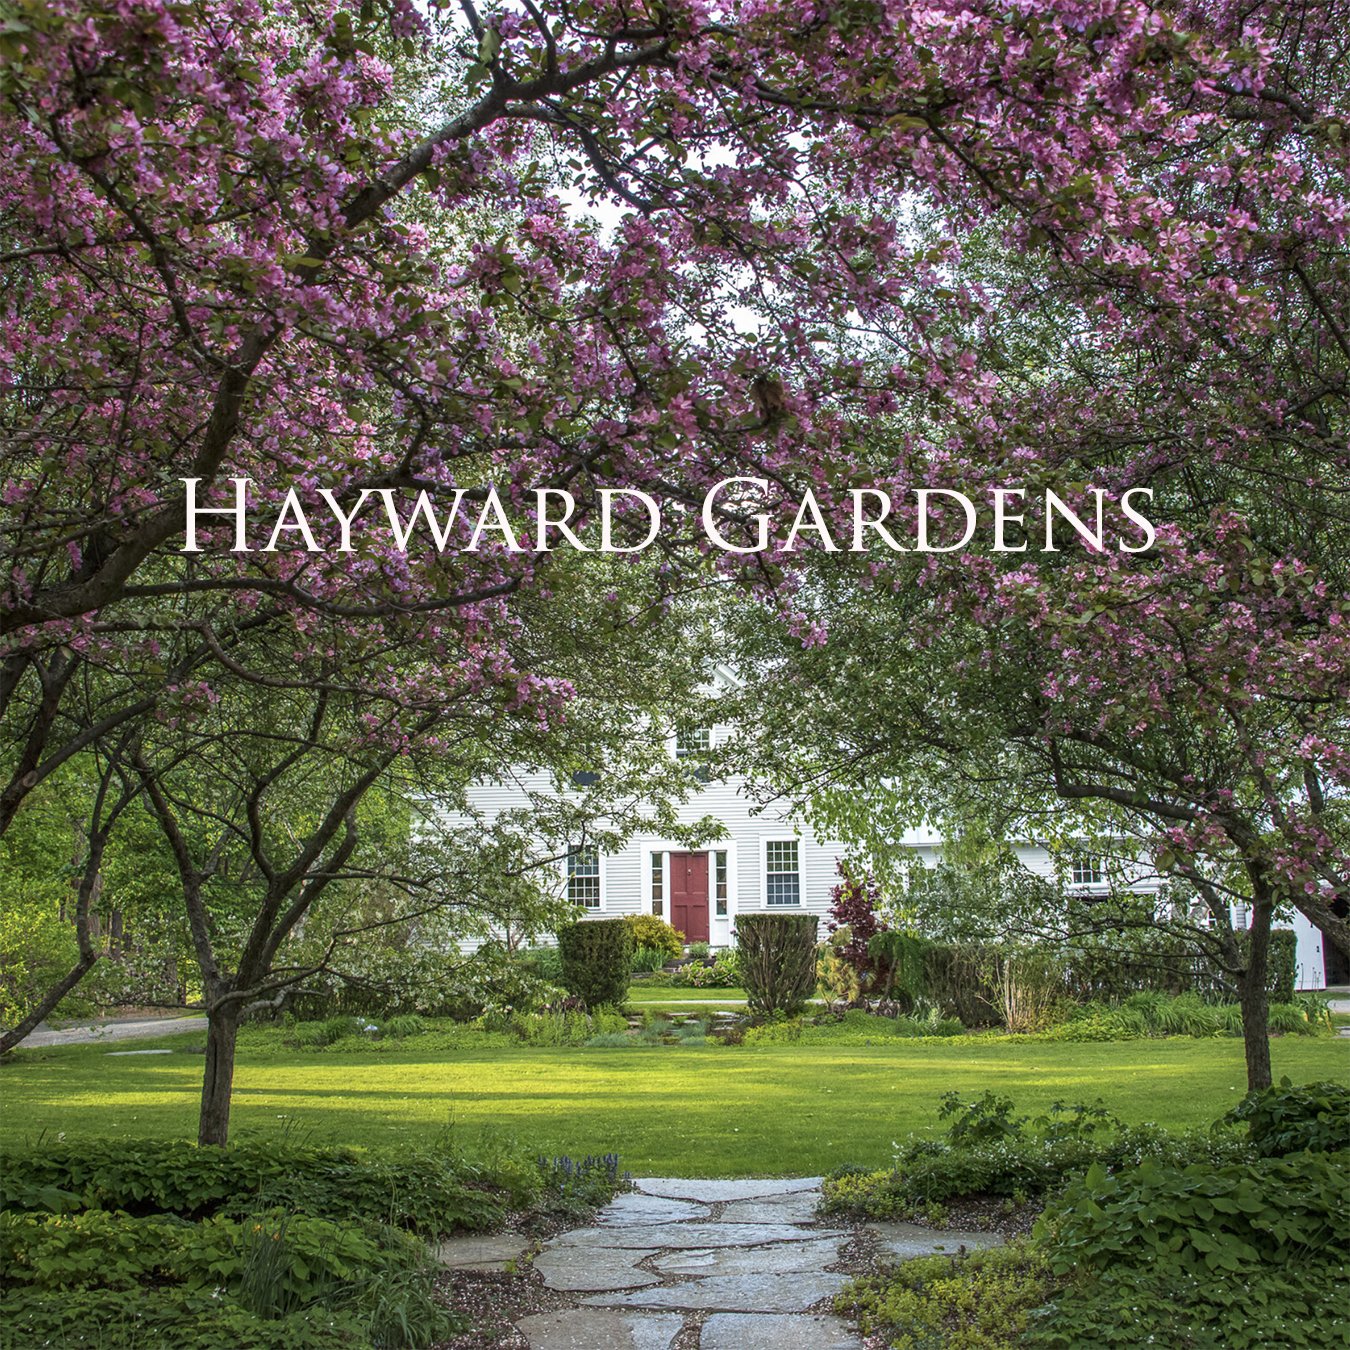 hayward gardens2 copy.jpg